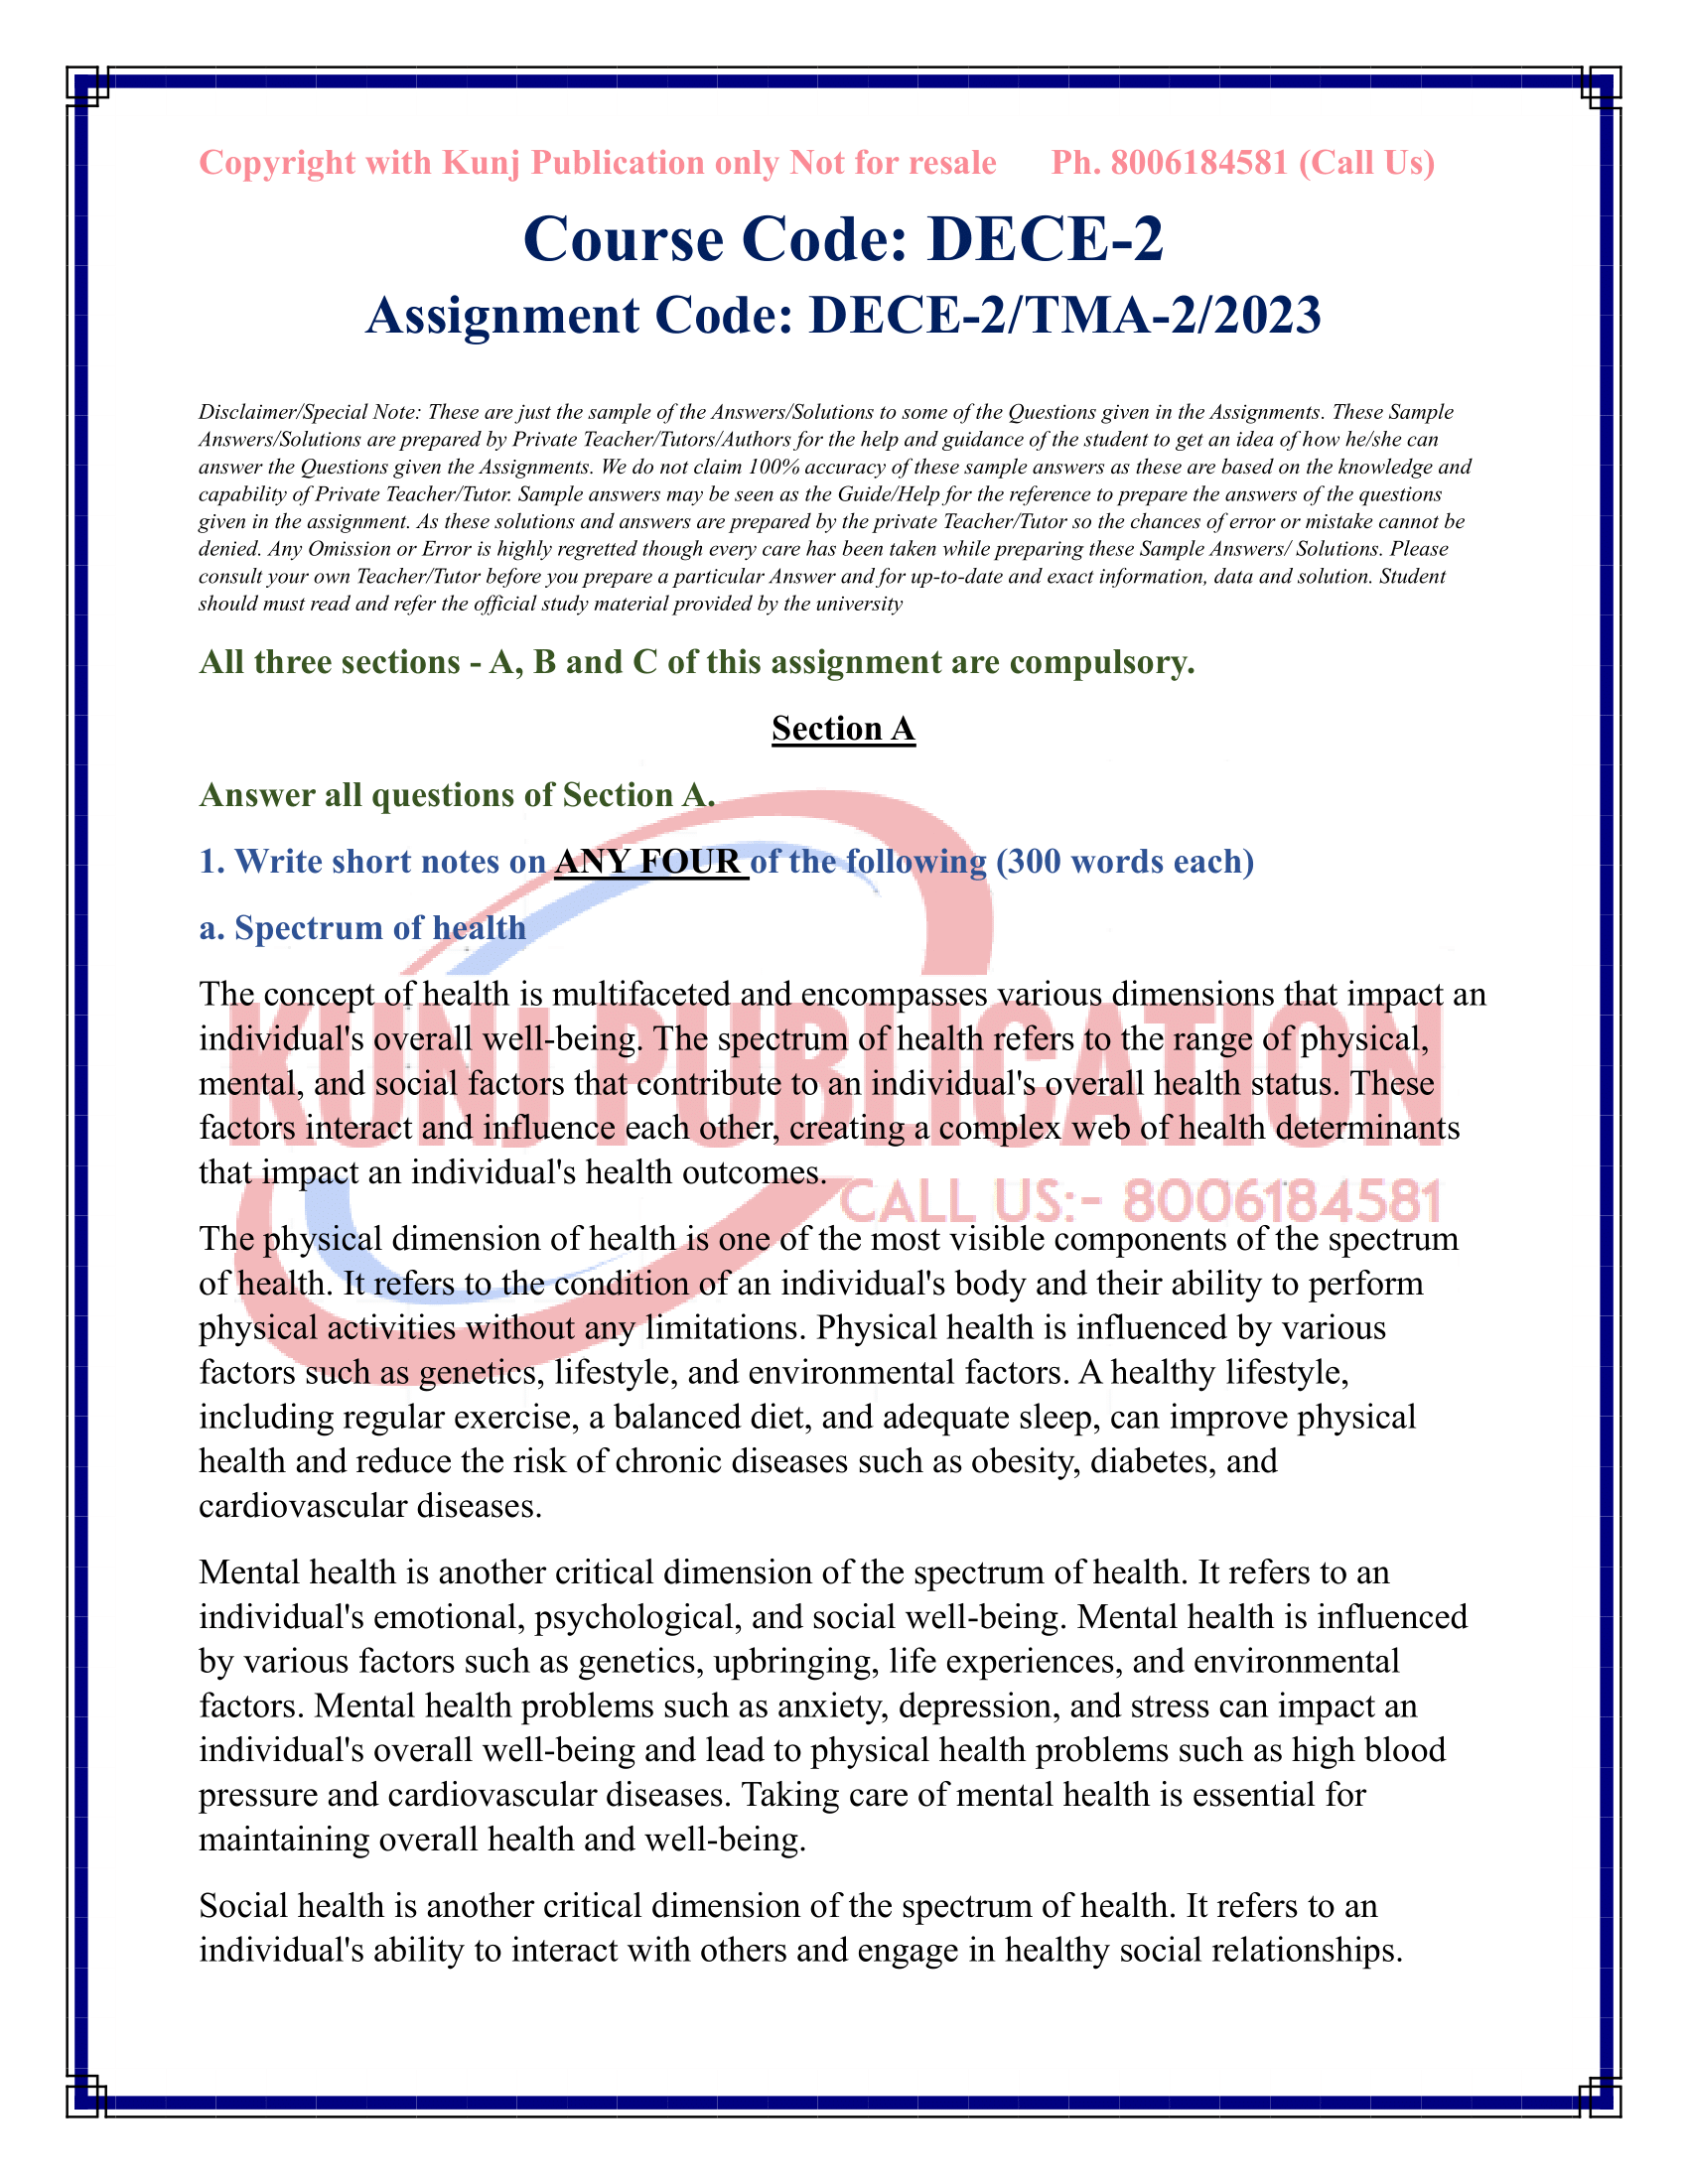 dece 2 solved assignment pdf